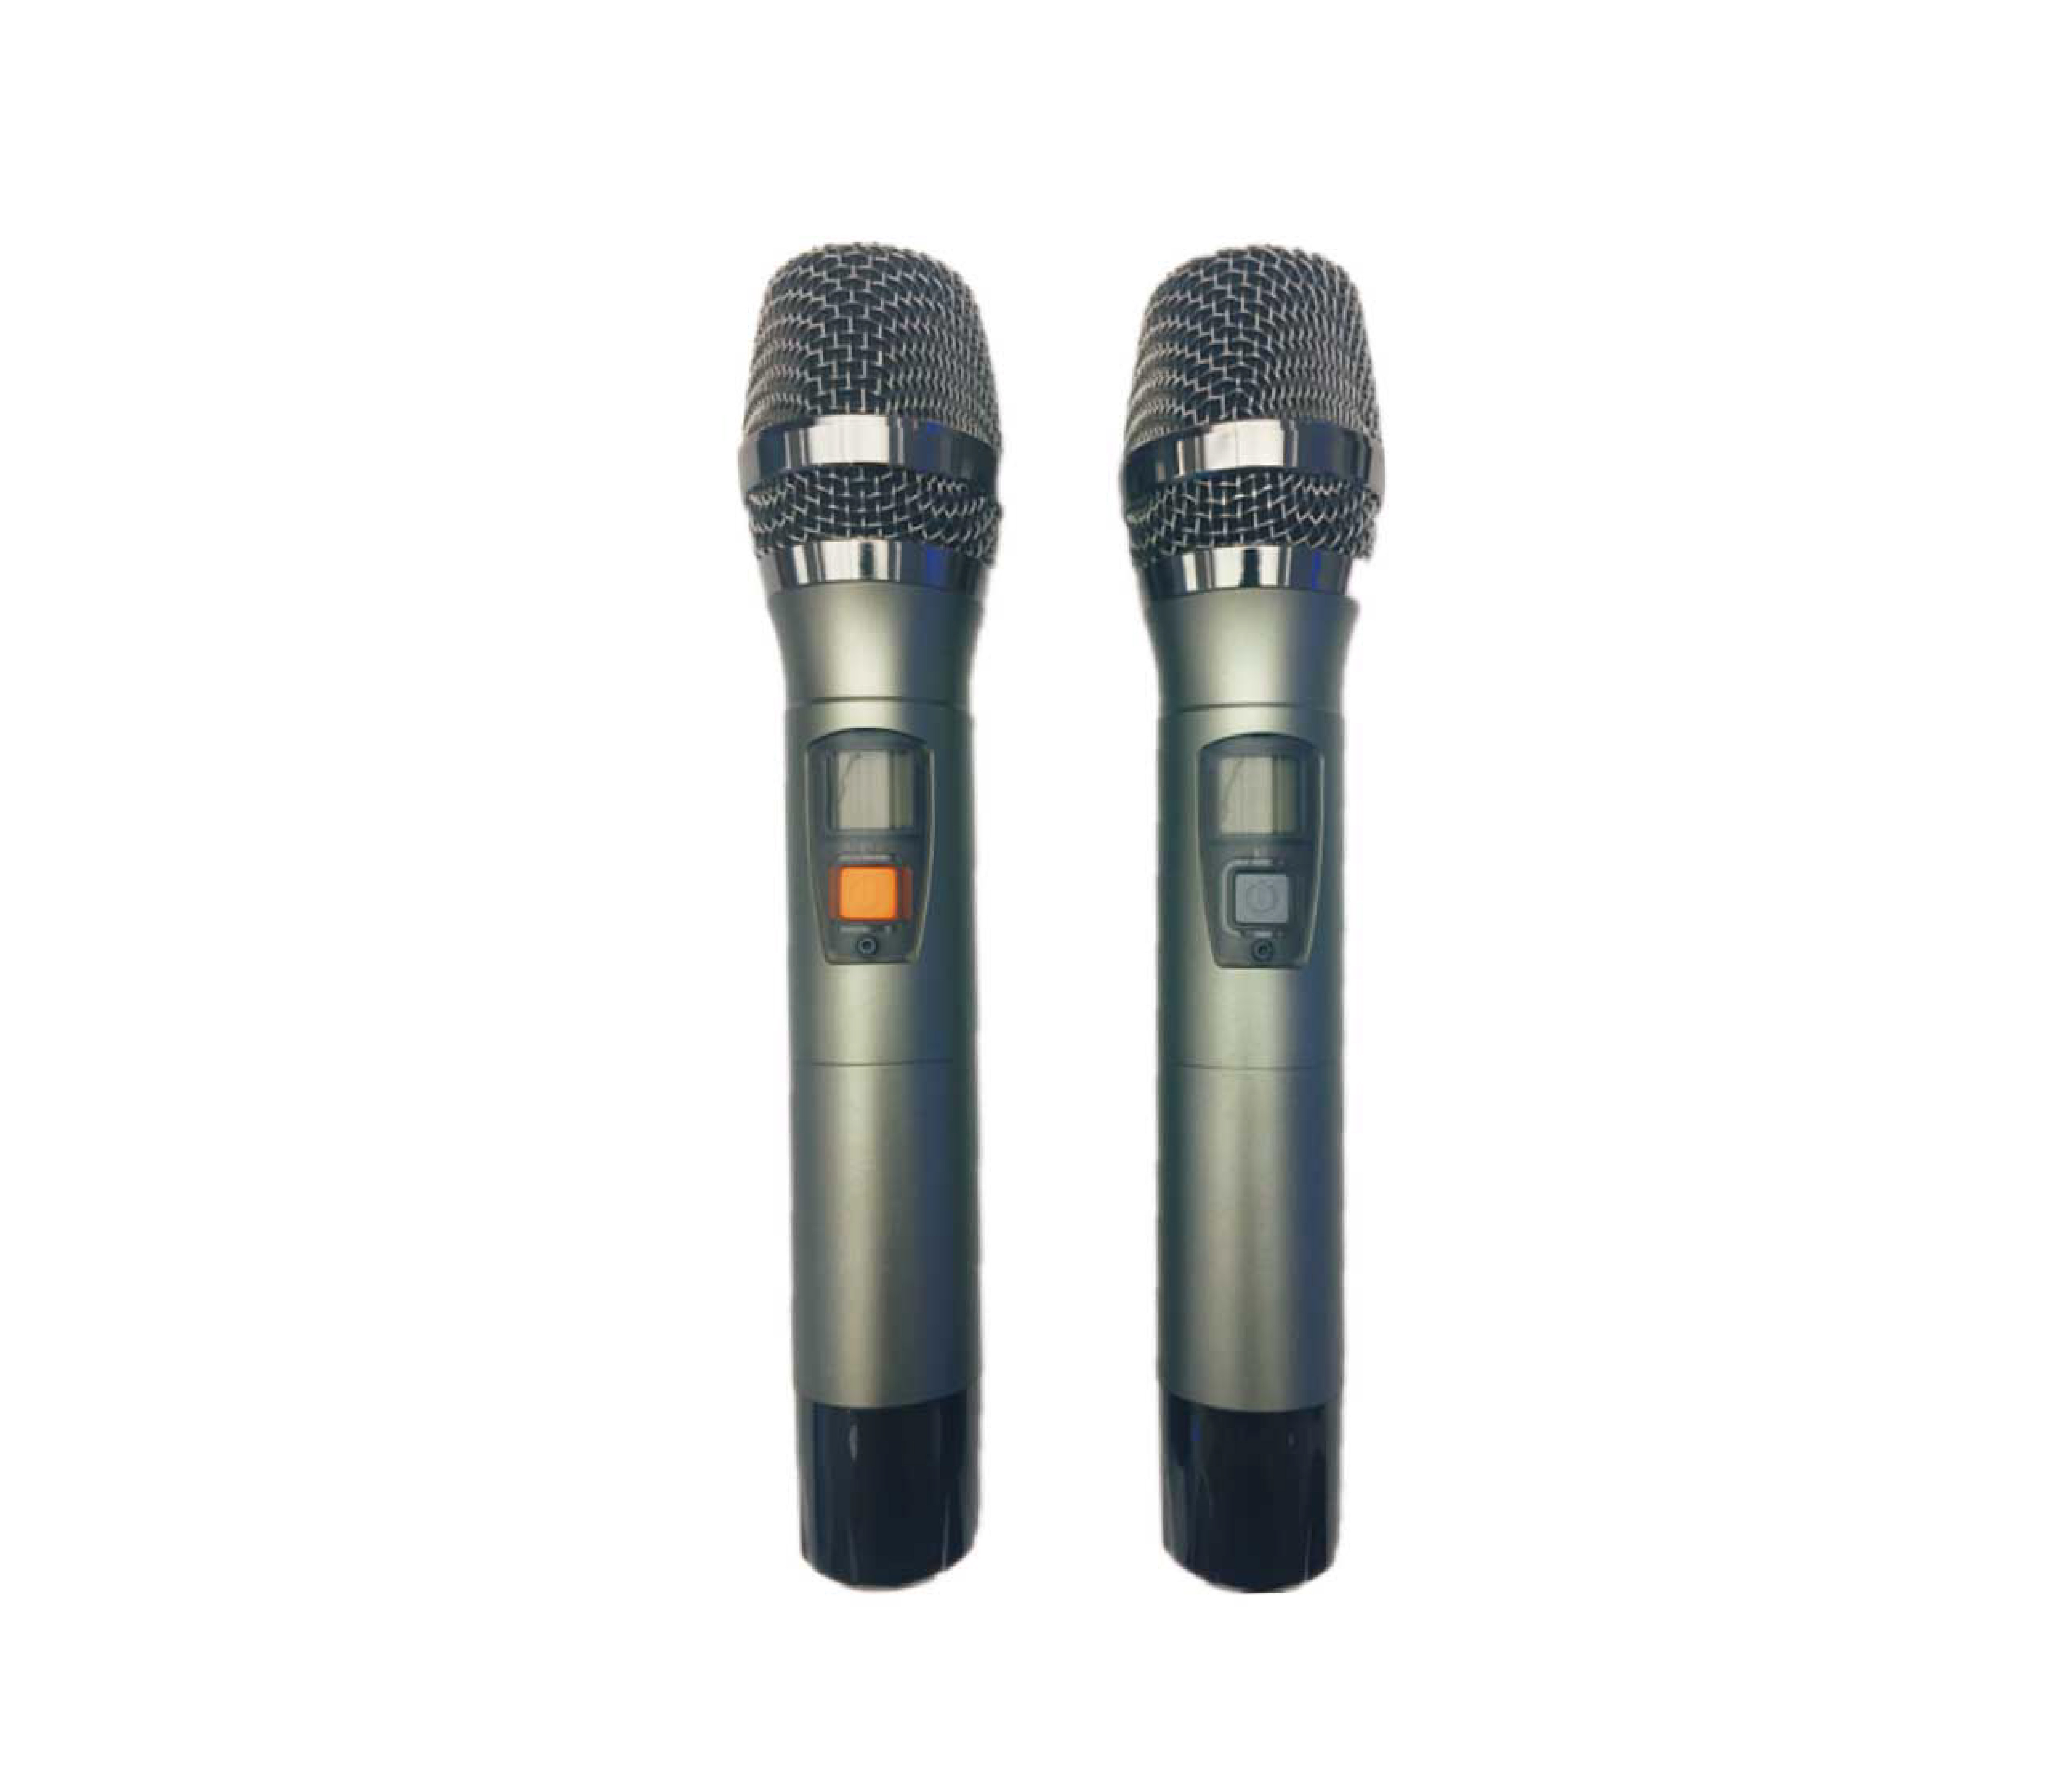 COK ST-888 Microphone